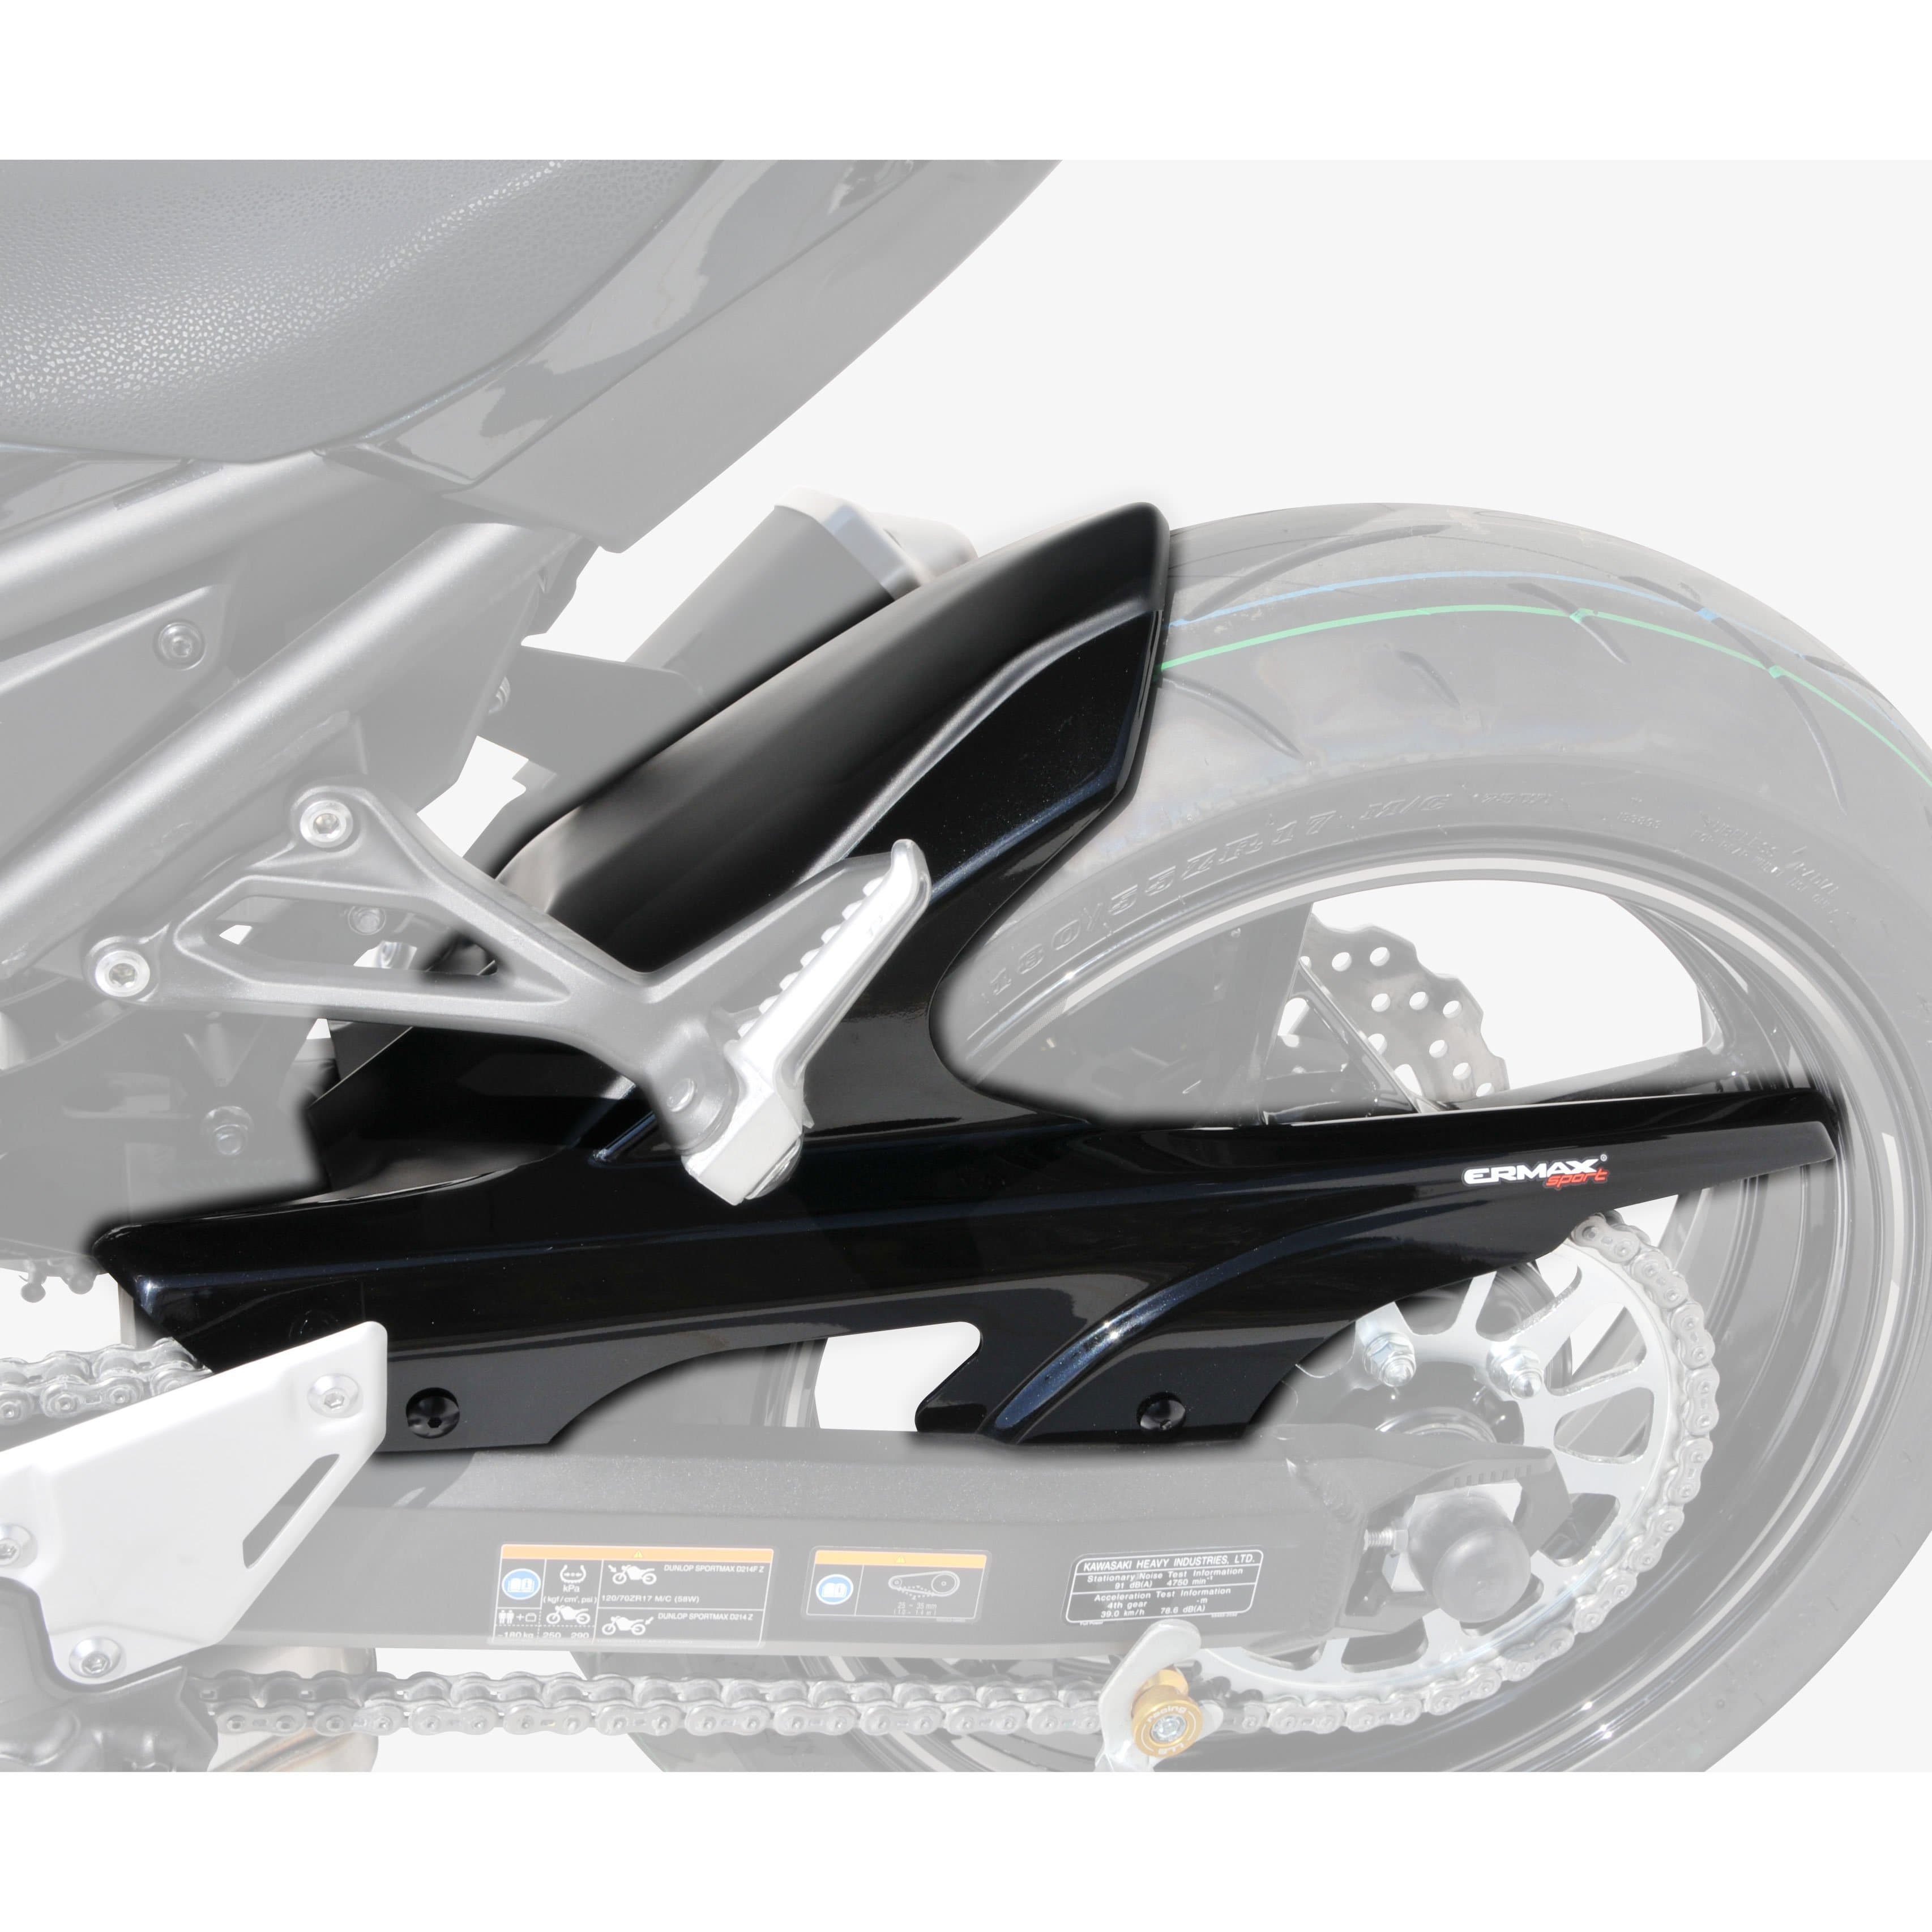 Ermax Hugger | Matte Metallic Black (Matte Metallic Spark Black) | Kawasaki Z 900 2017>Current-E7303096-47-Huggers-Pyramid Plastics